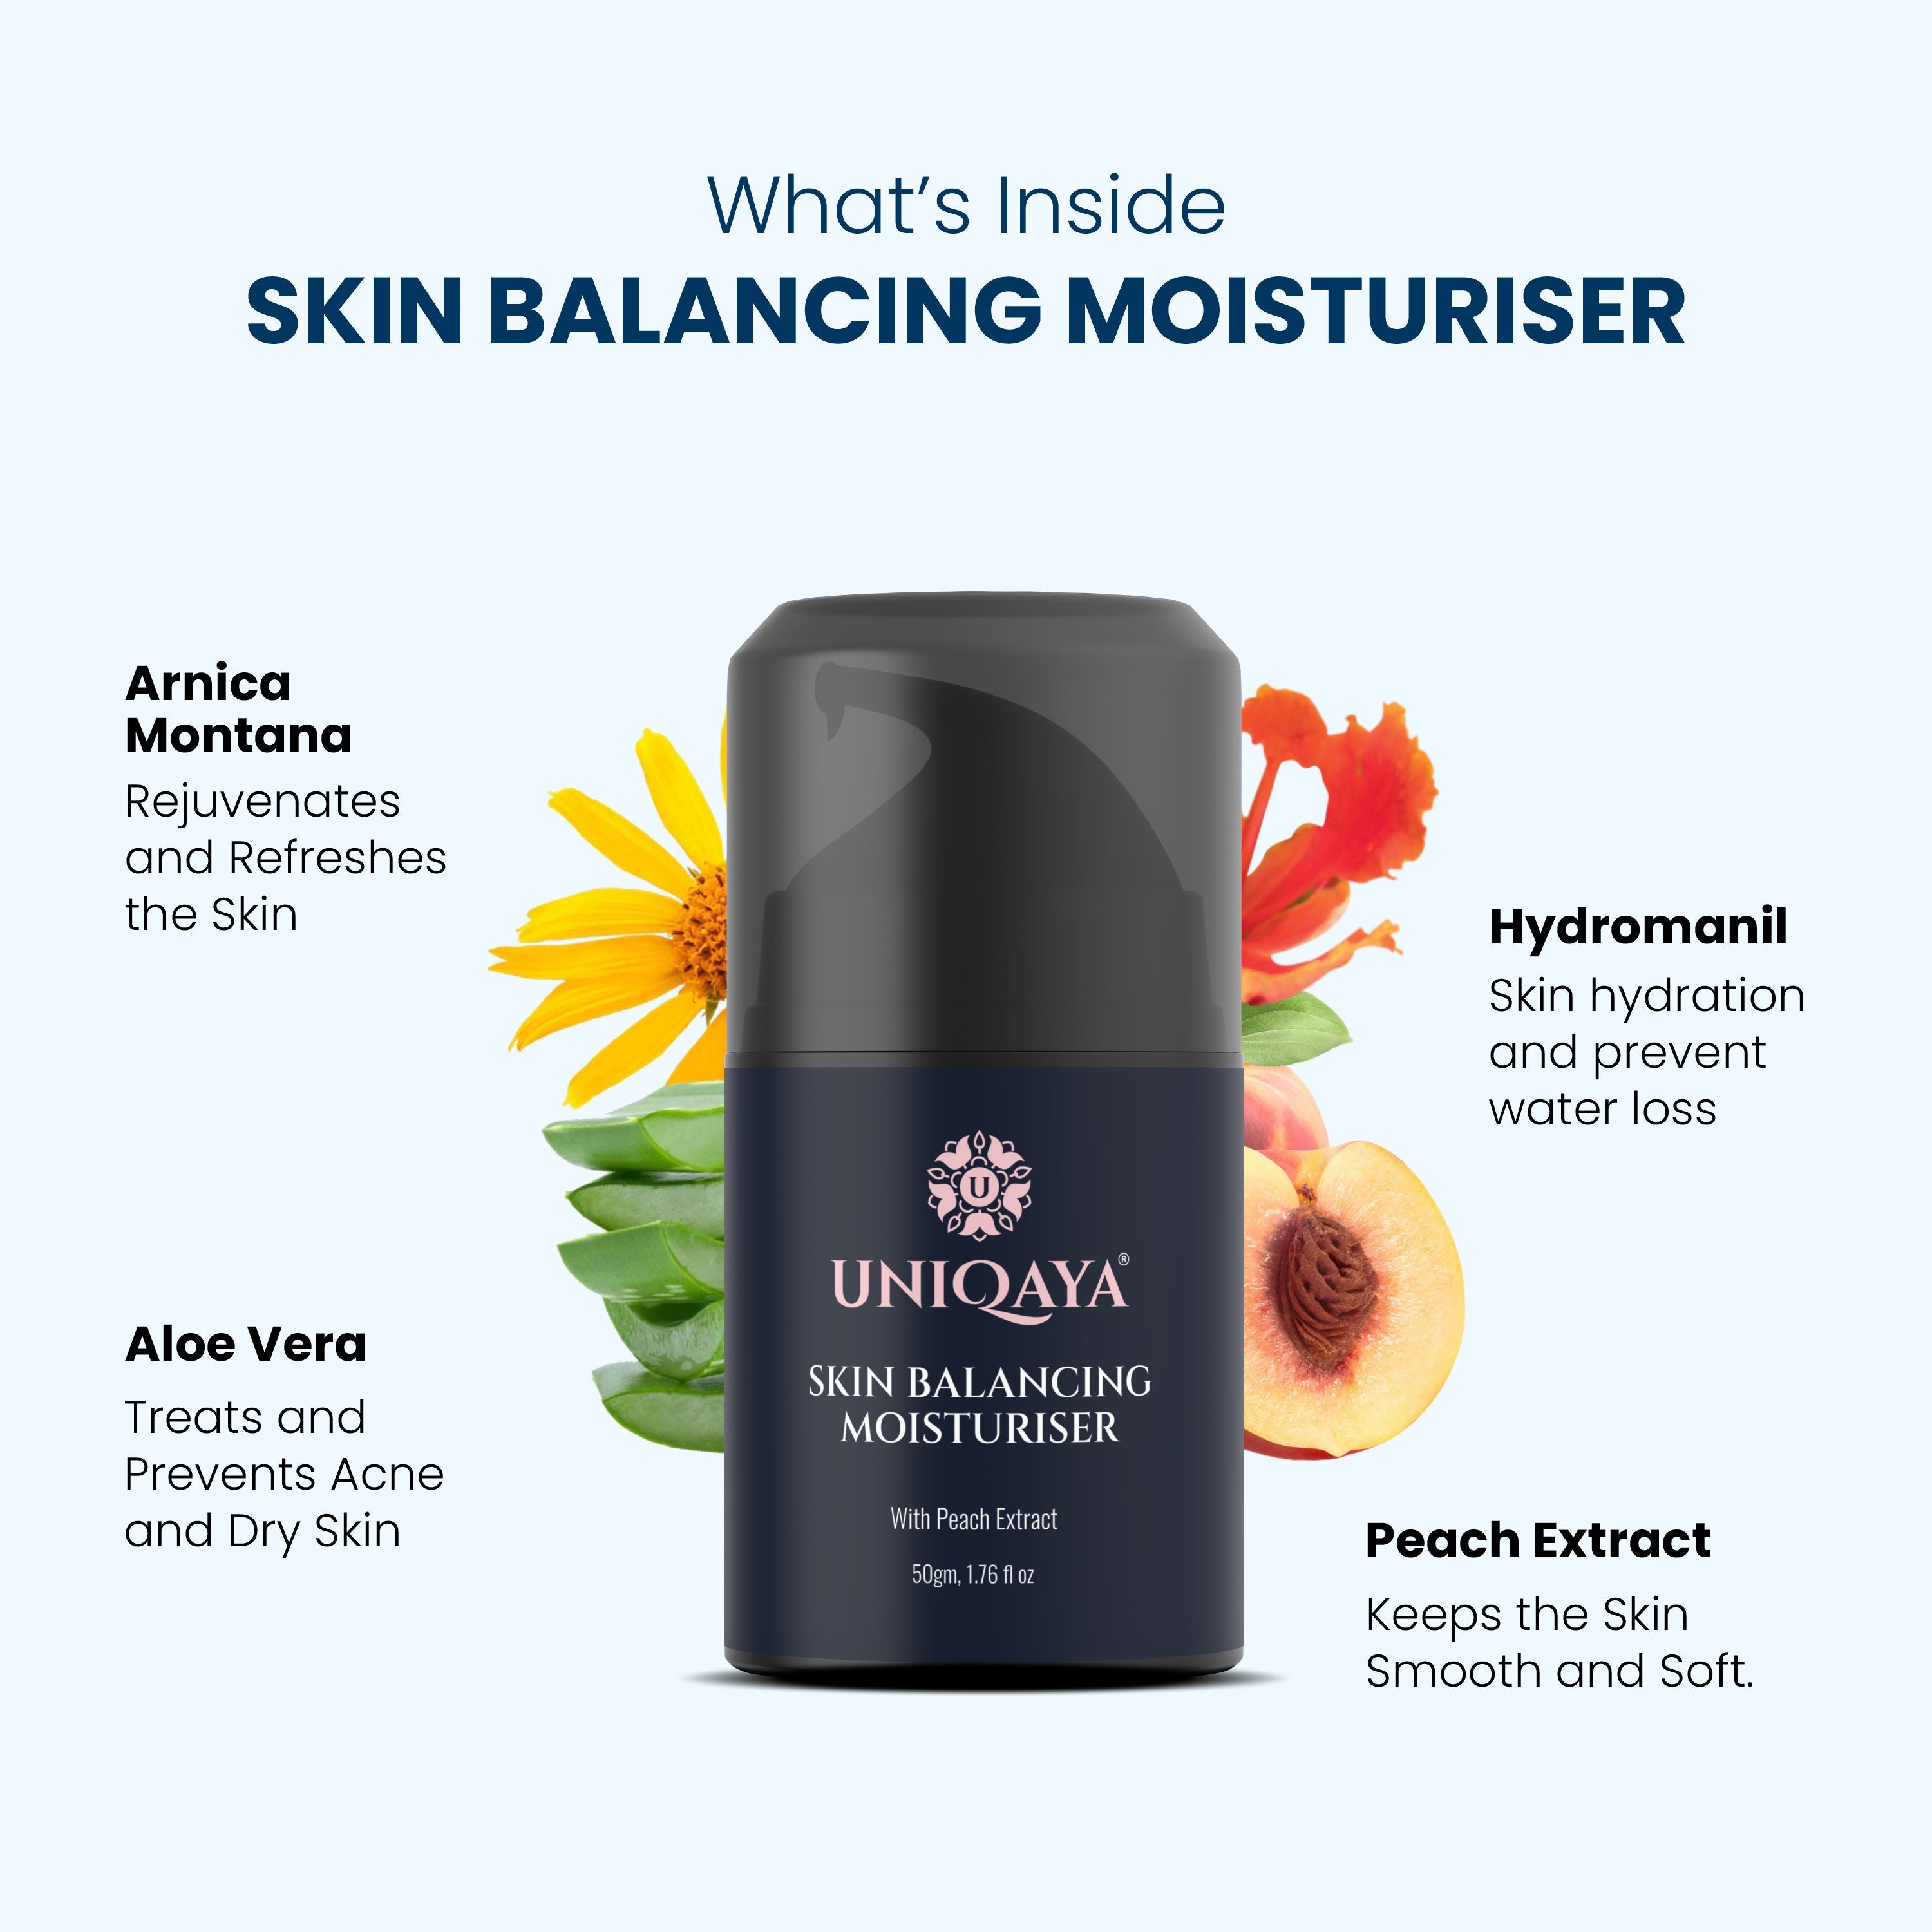 What's Inside Skin Balancing Moisturiser